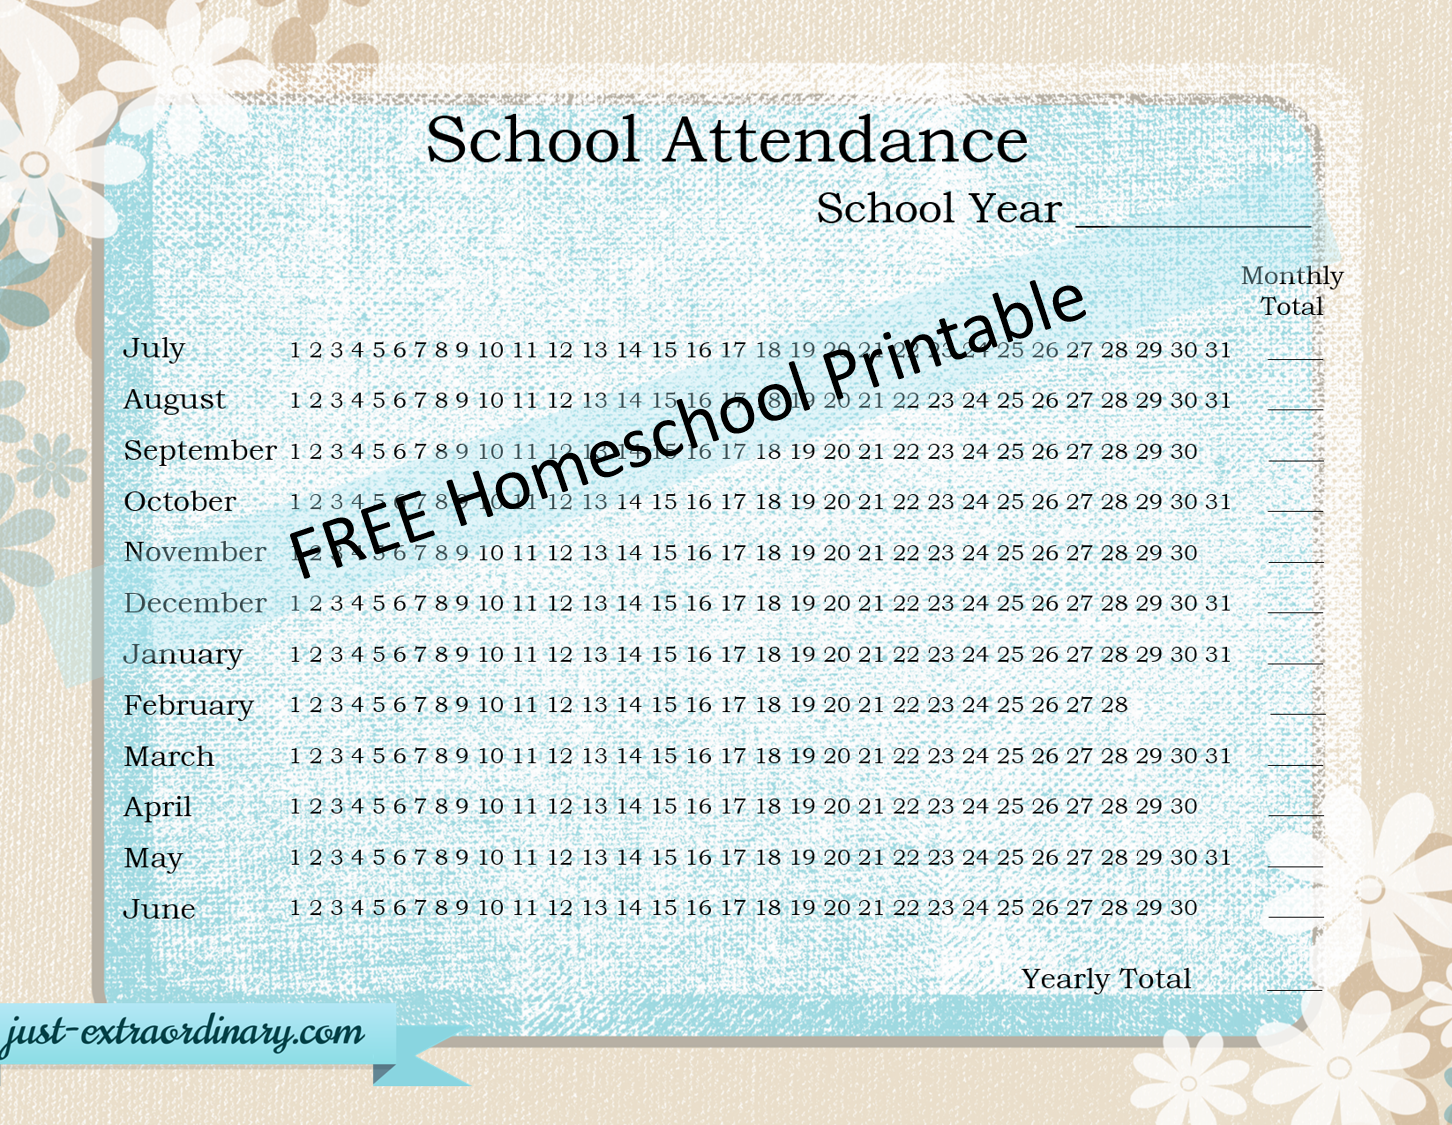 School-attendance-Poster